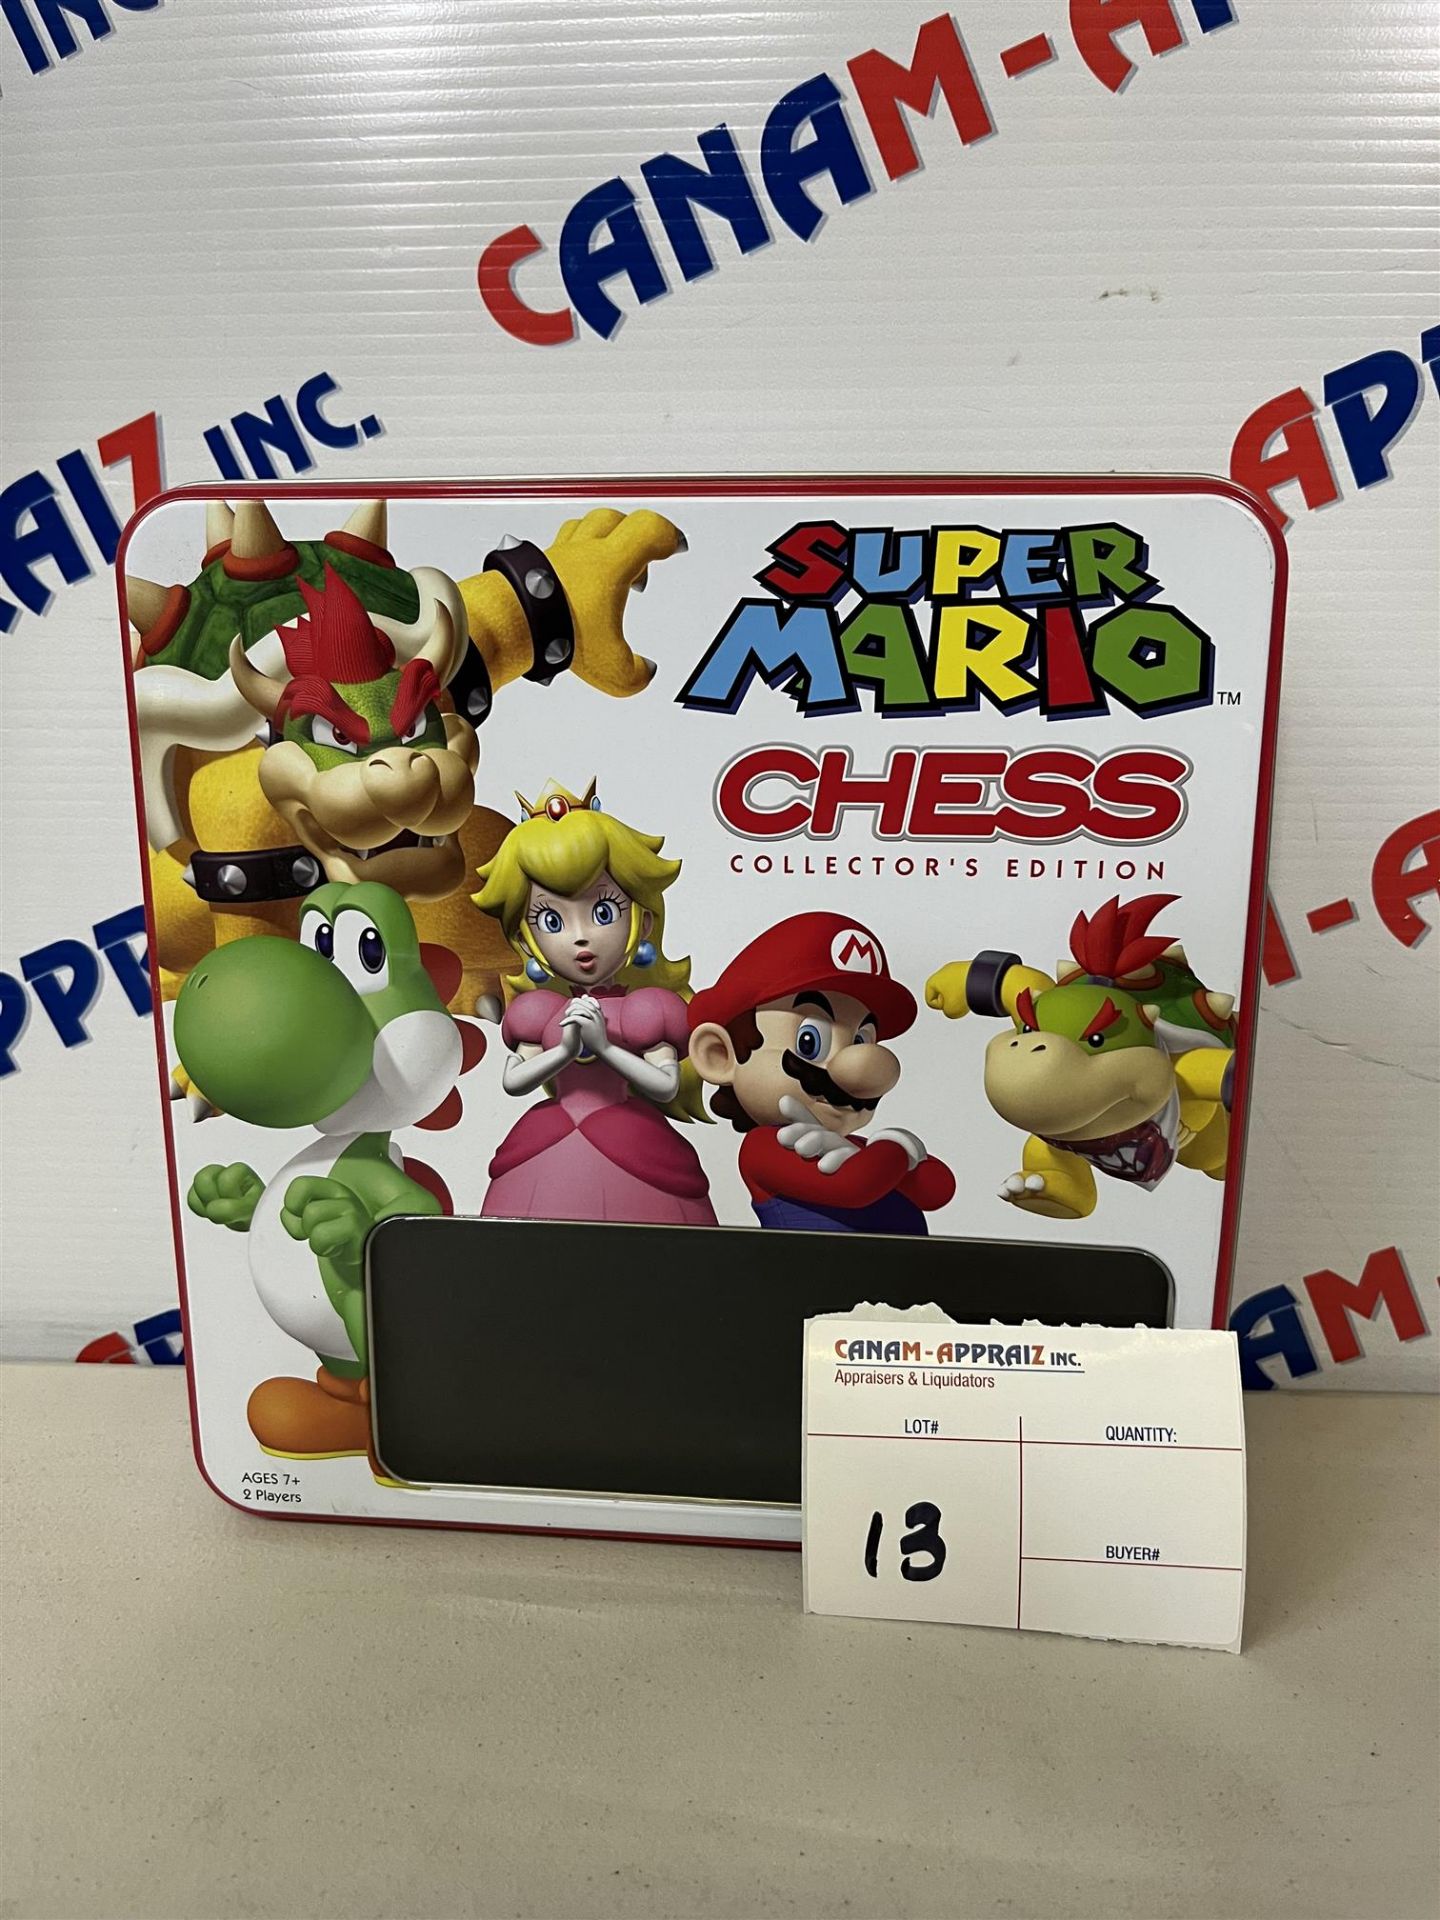 Super Mario Chess Collecter's Eddition